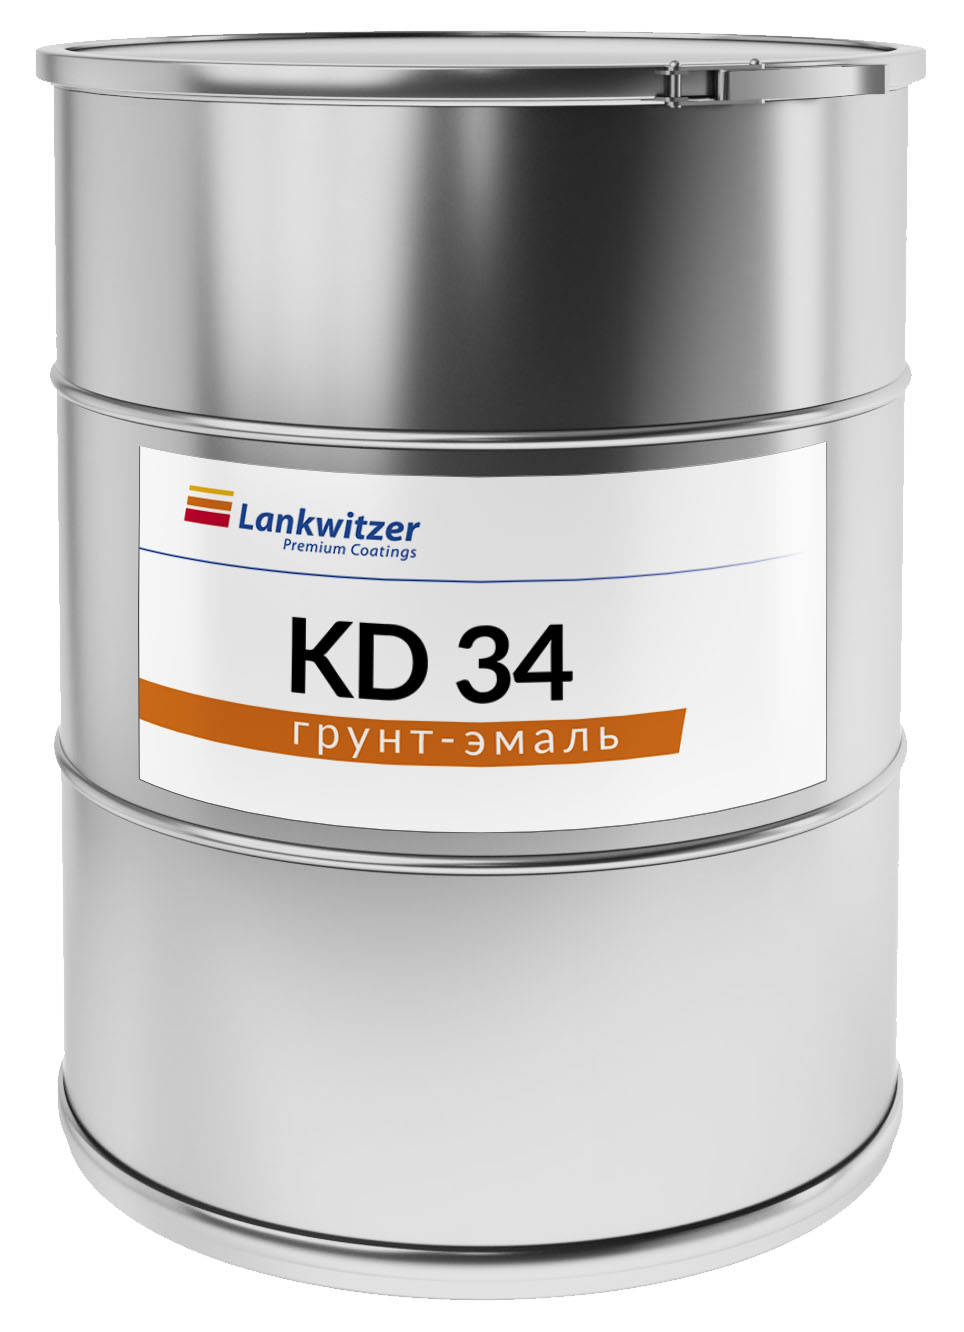 KD 34 грунт-эмаль